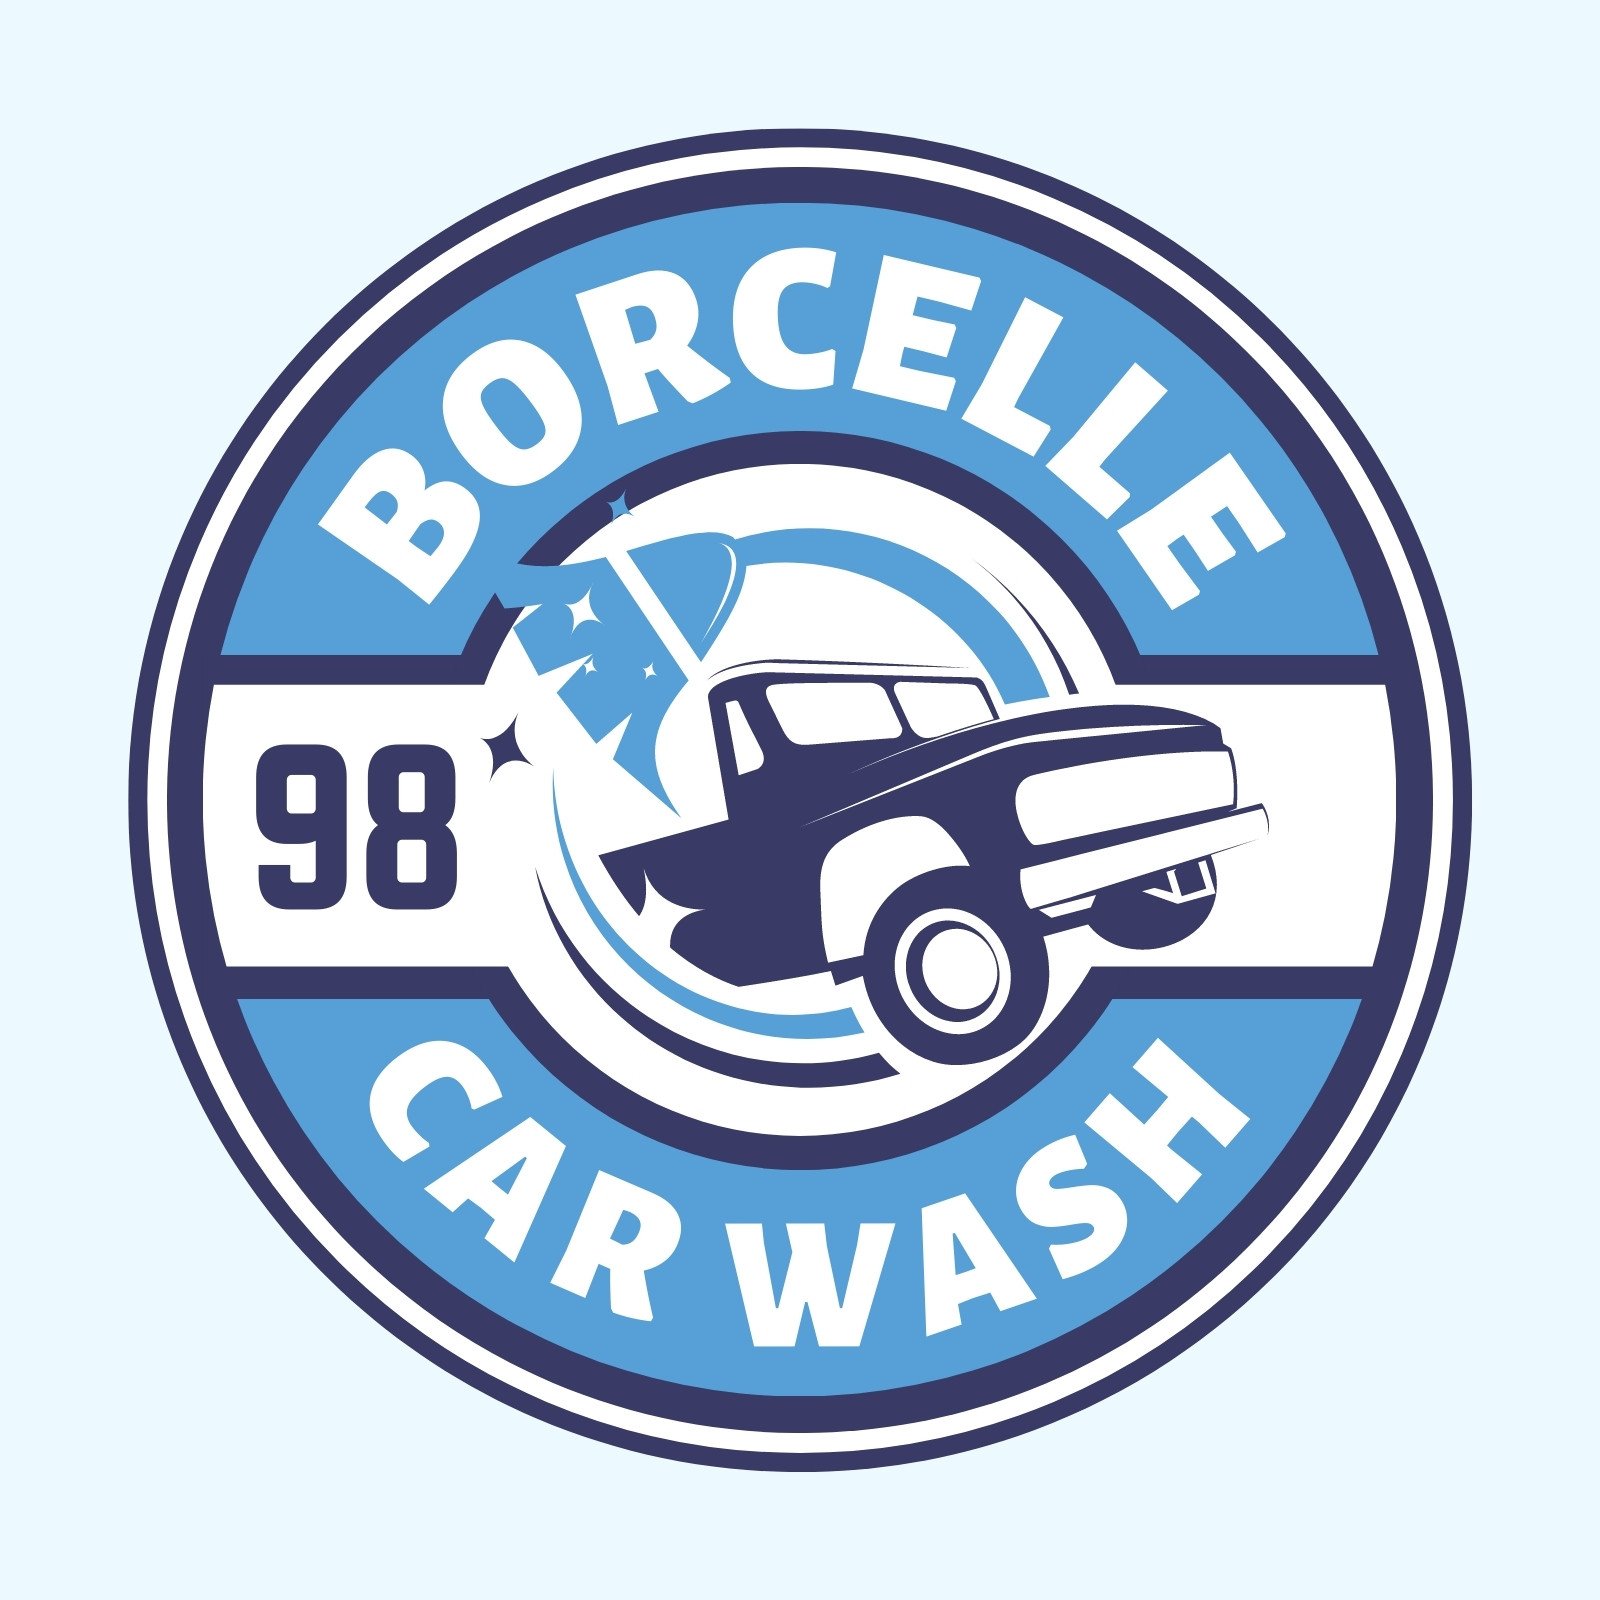 Free and customizable car wash logo templates